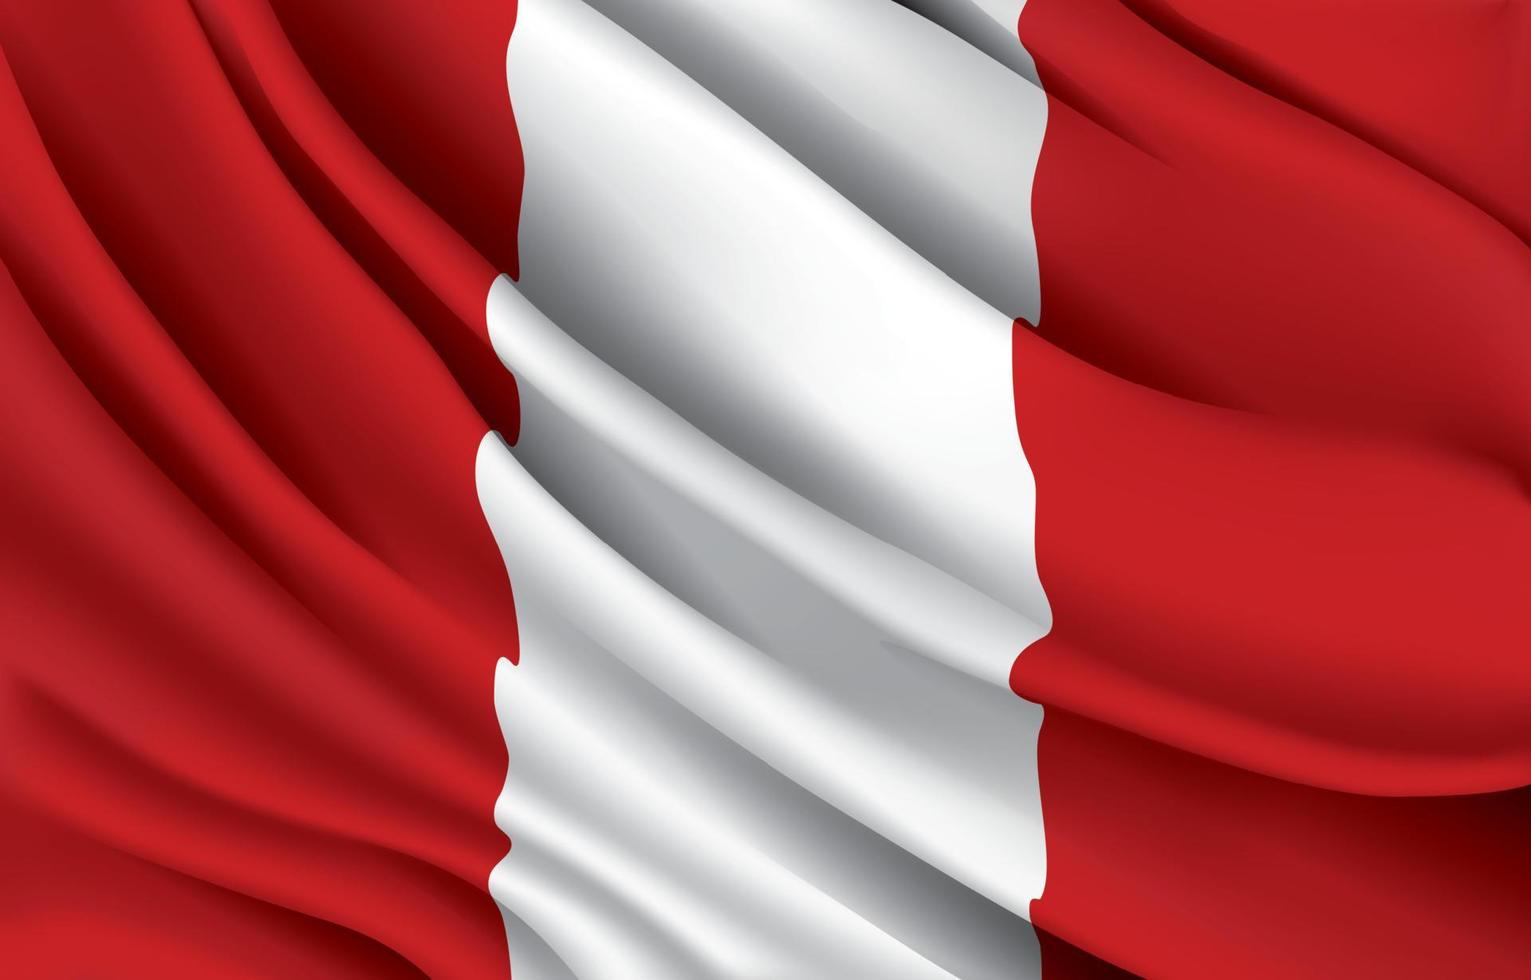 peru national flag waving realistic vector illustration